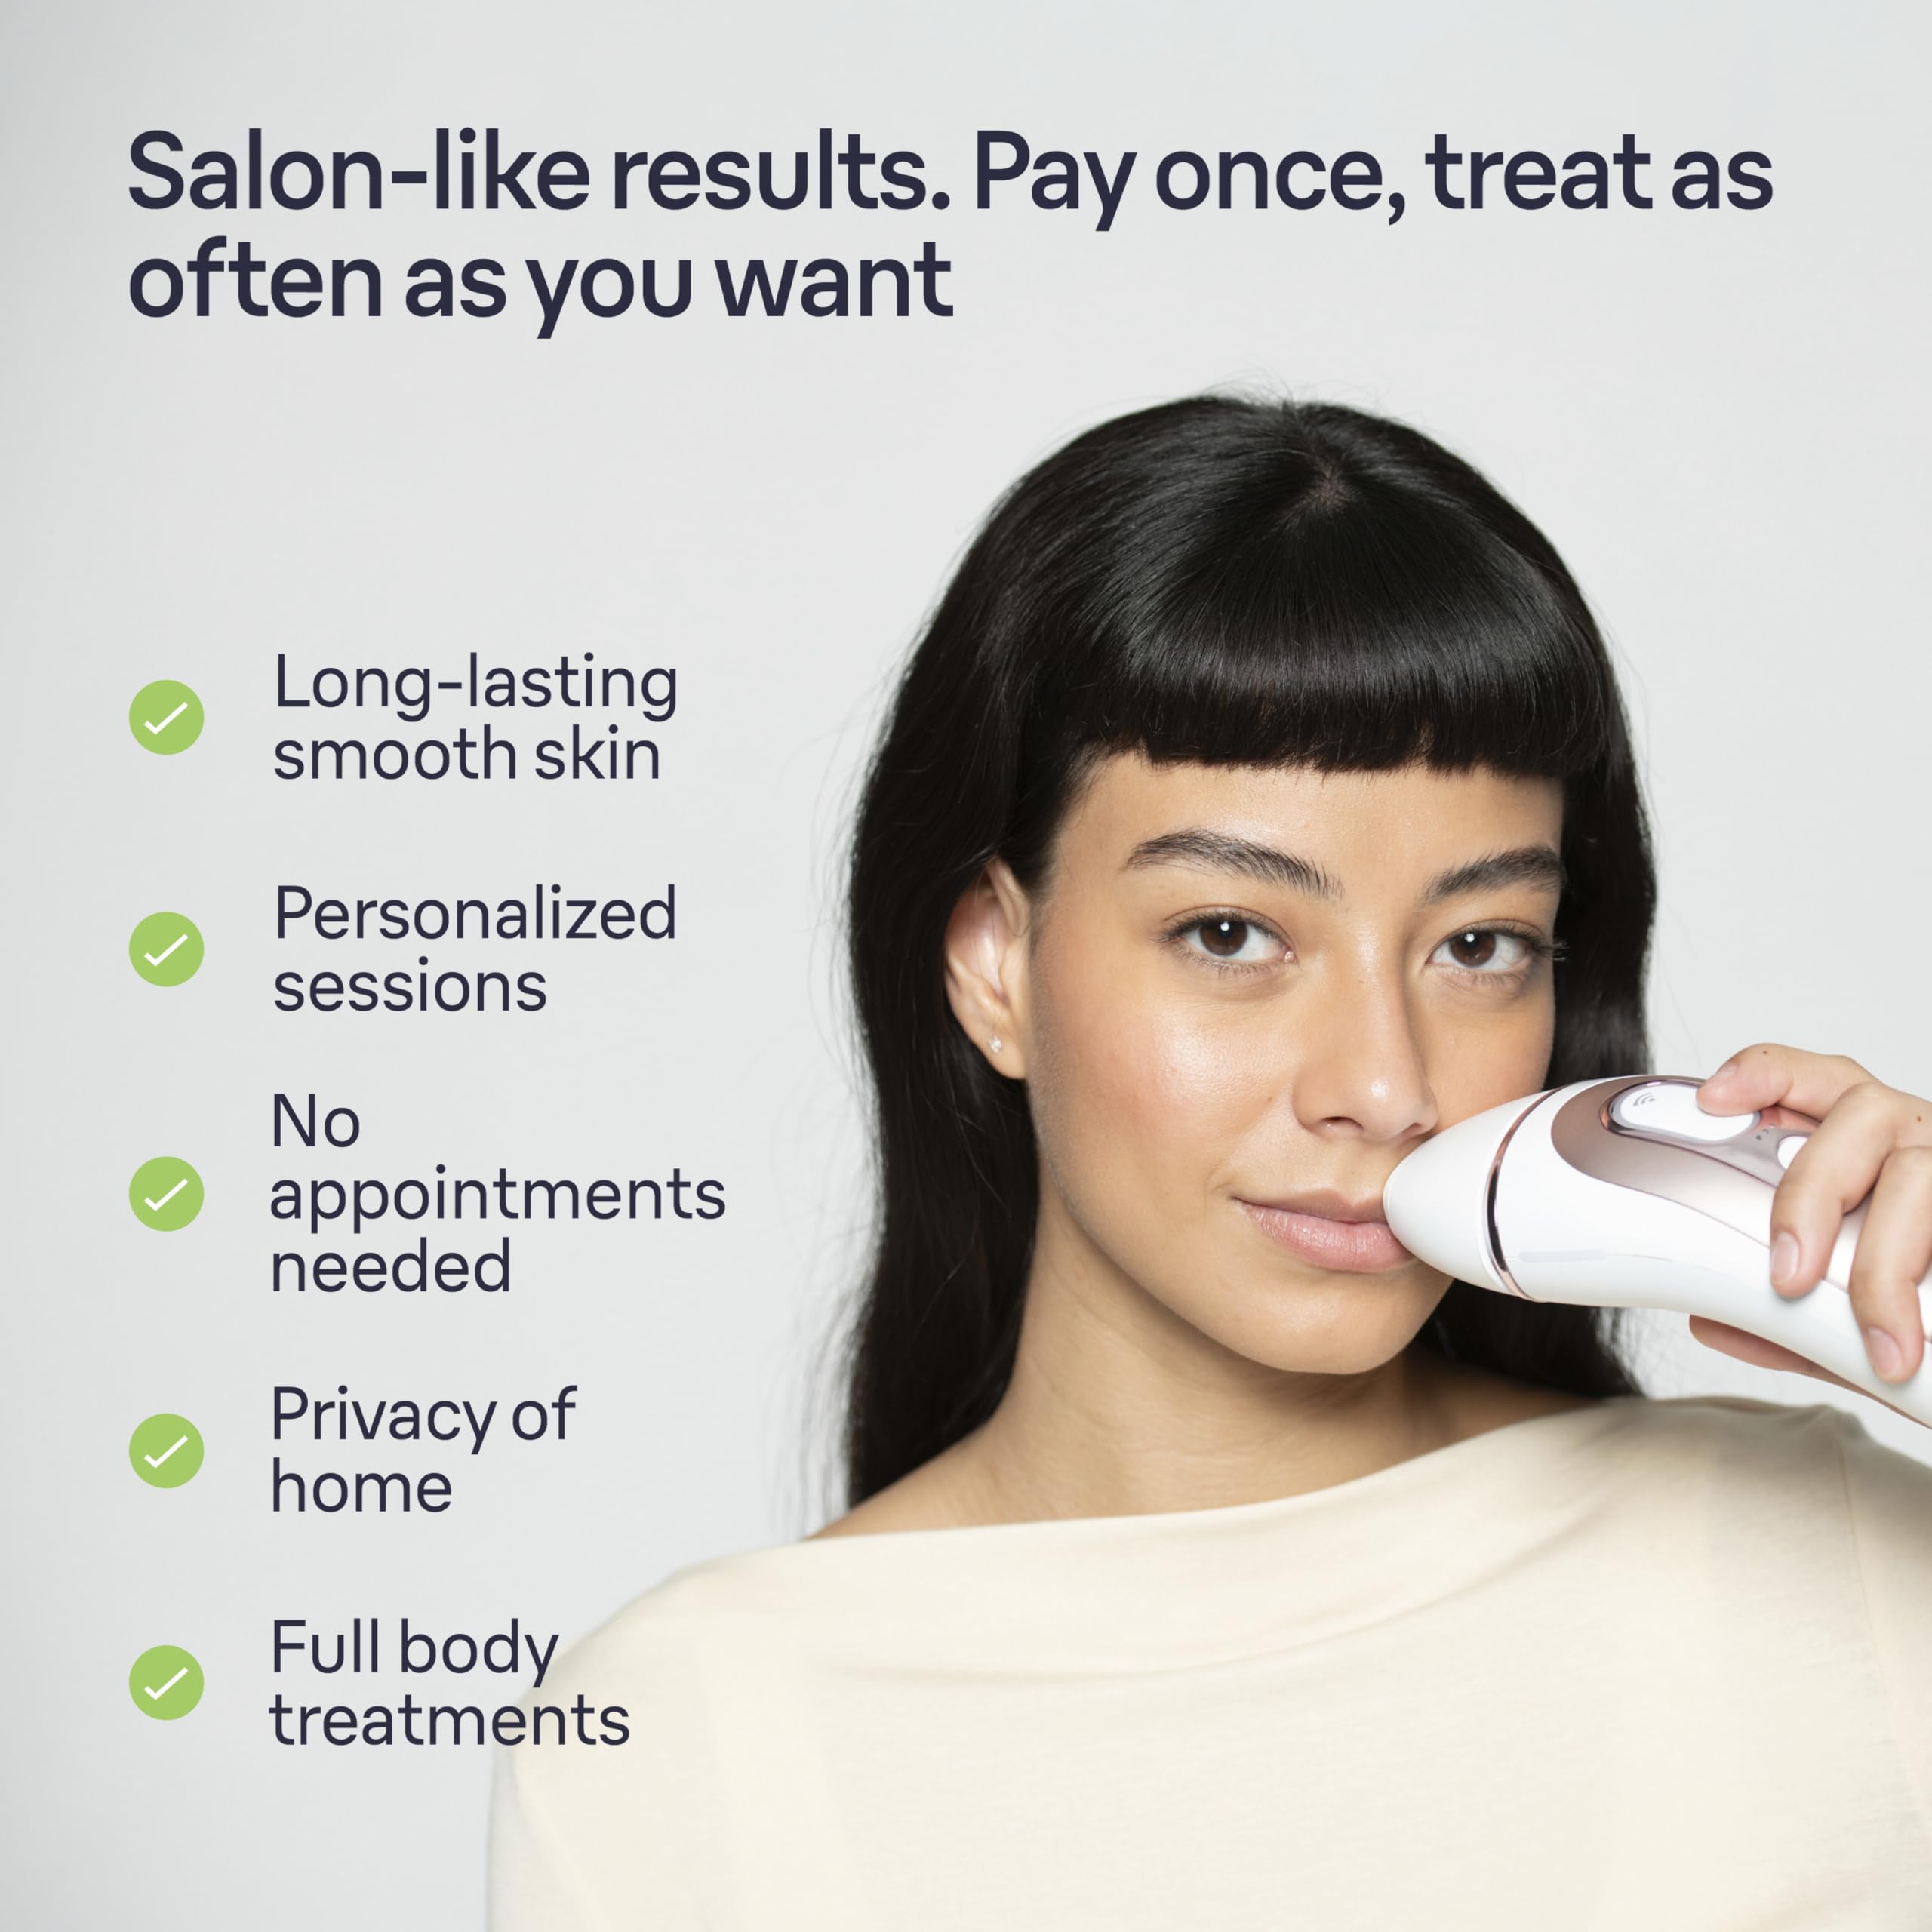 Braun IPL Long-lasting Laser Hair Removal Device for Women & Men, Skin i·Expert, at Home Hair Removal, w/ Free App, Vanity Case, Venus Razor, 3 Smart Heads, Alternative for Laser Hair Removal, PL7243